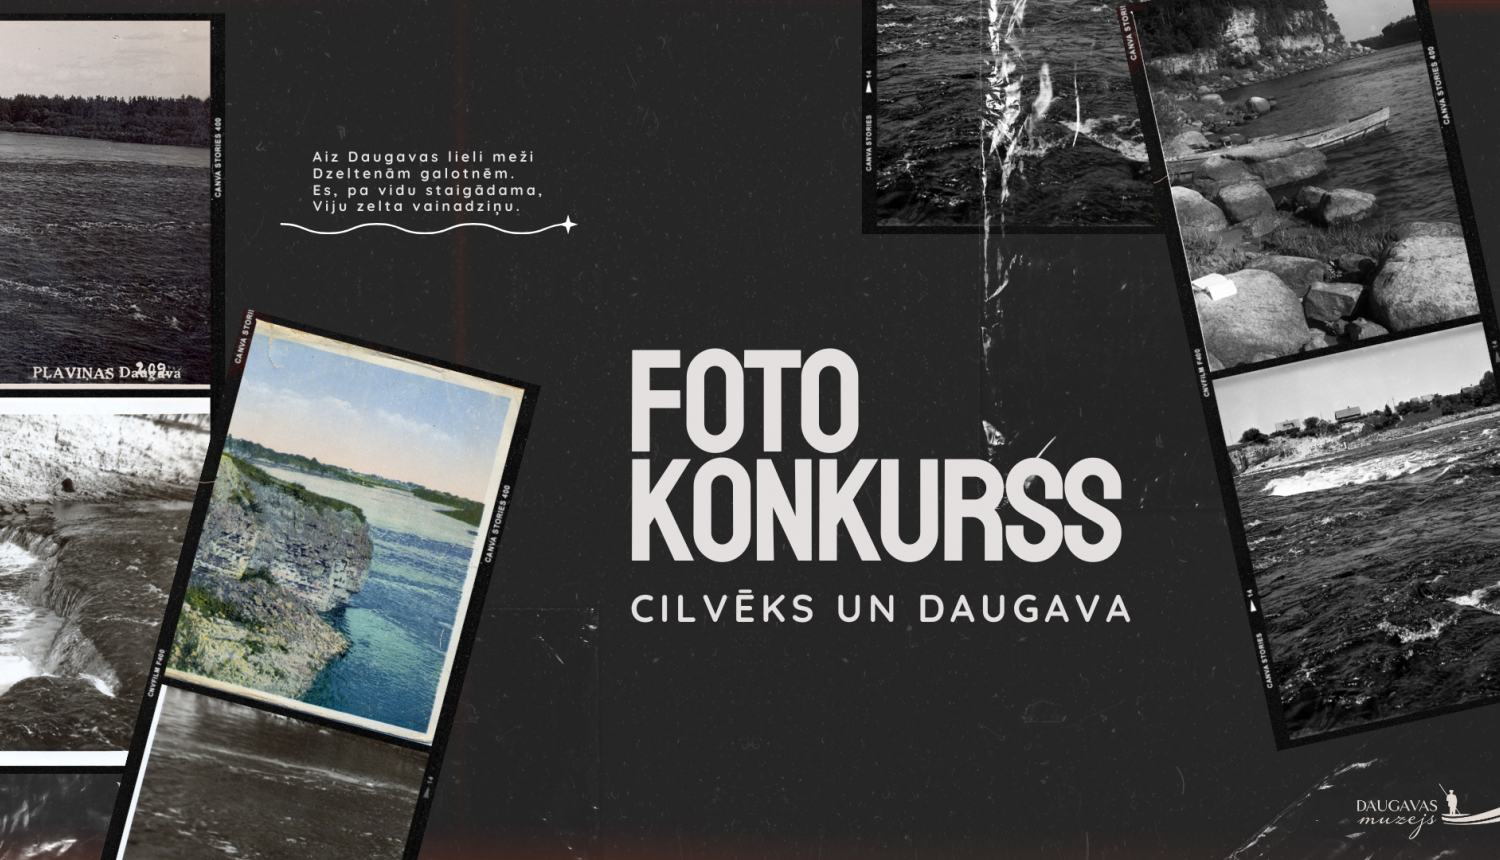 Fotokonkursa "Cilvēks un Daugava" afiša, nelielas kartītes ar Daugavas upi